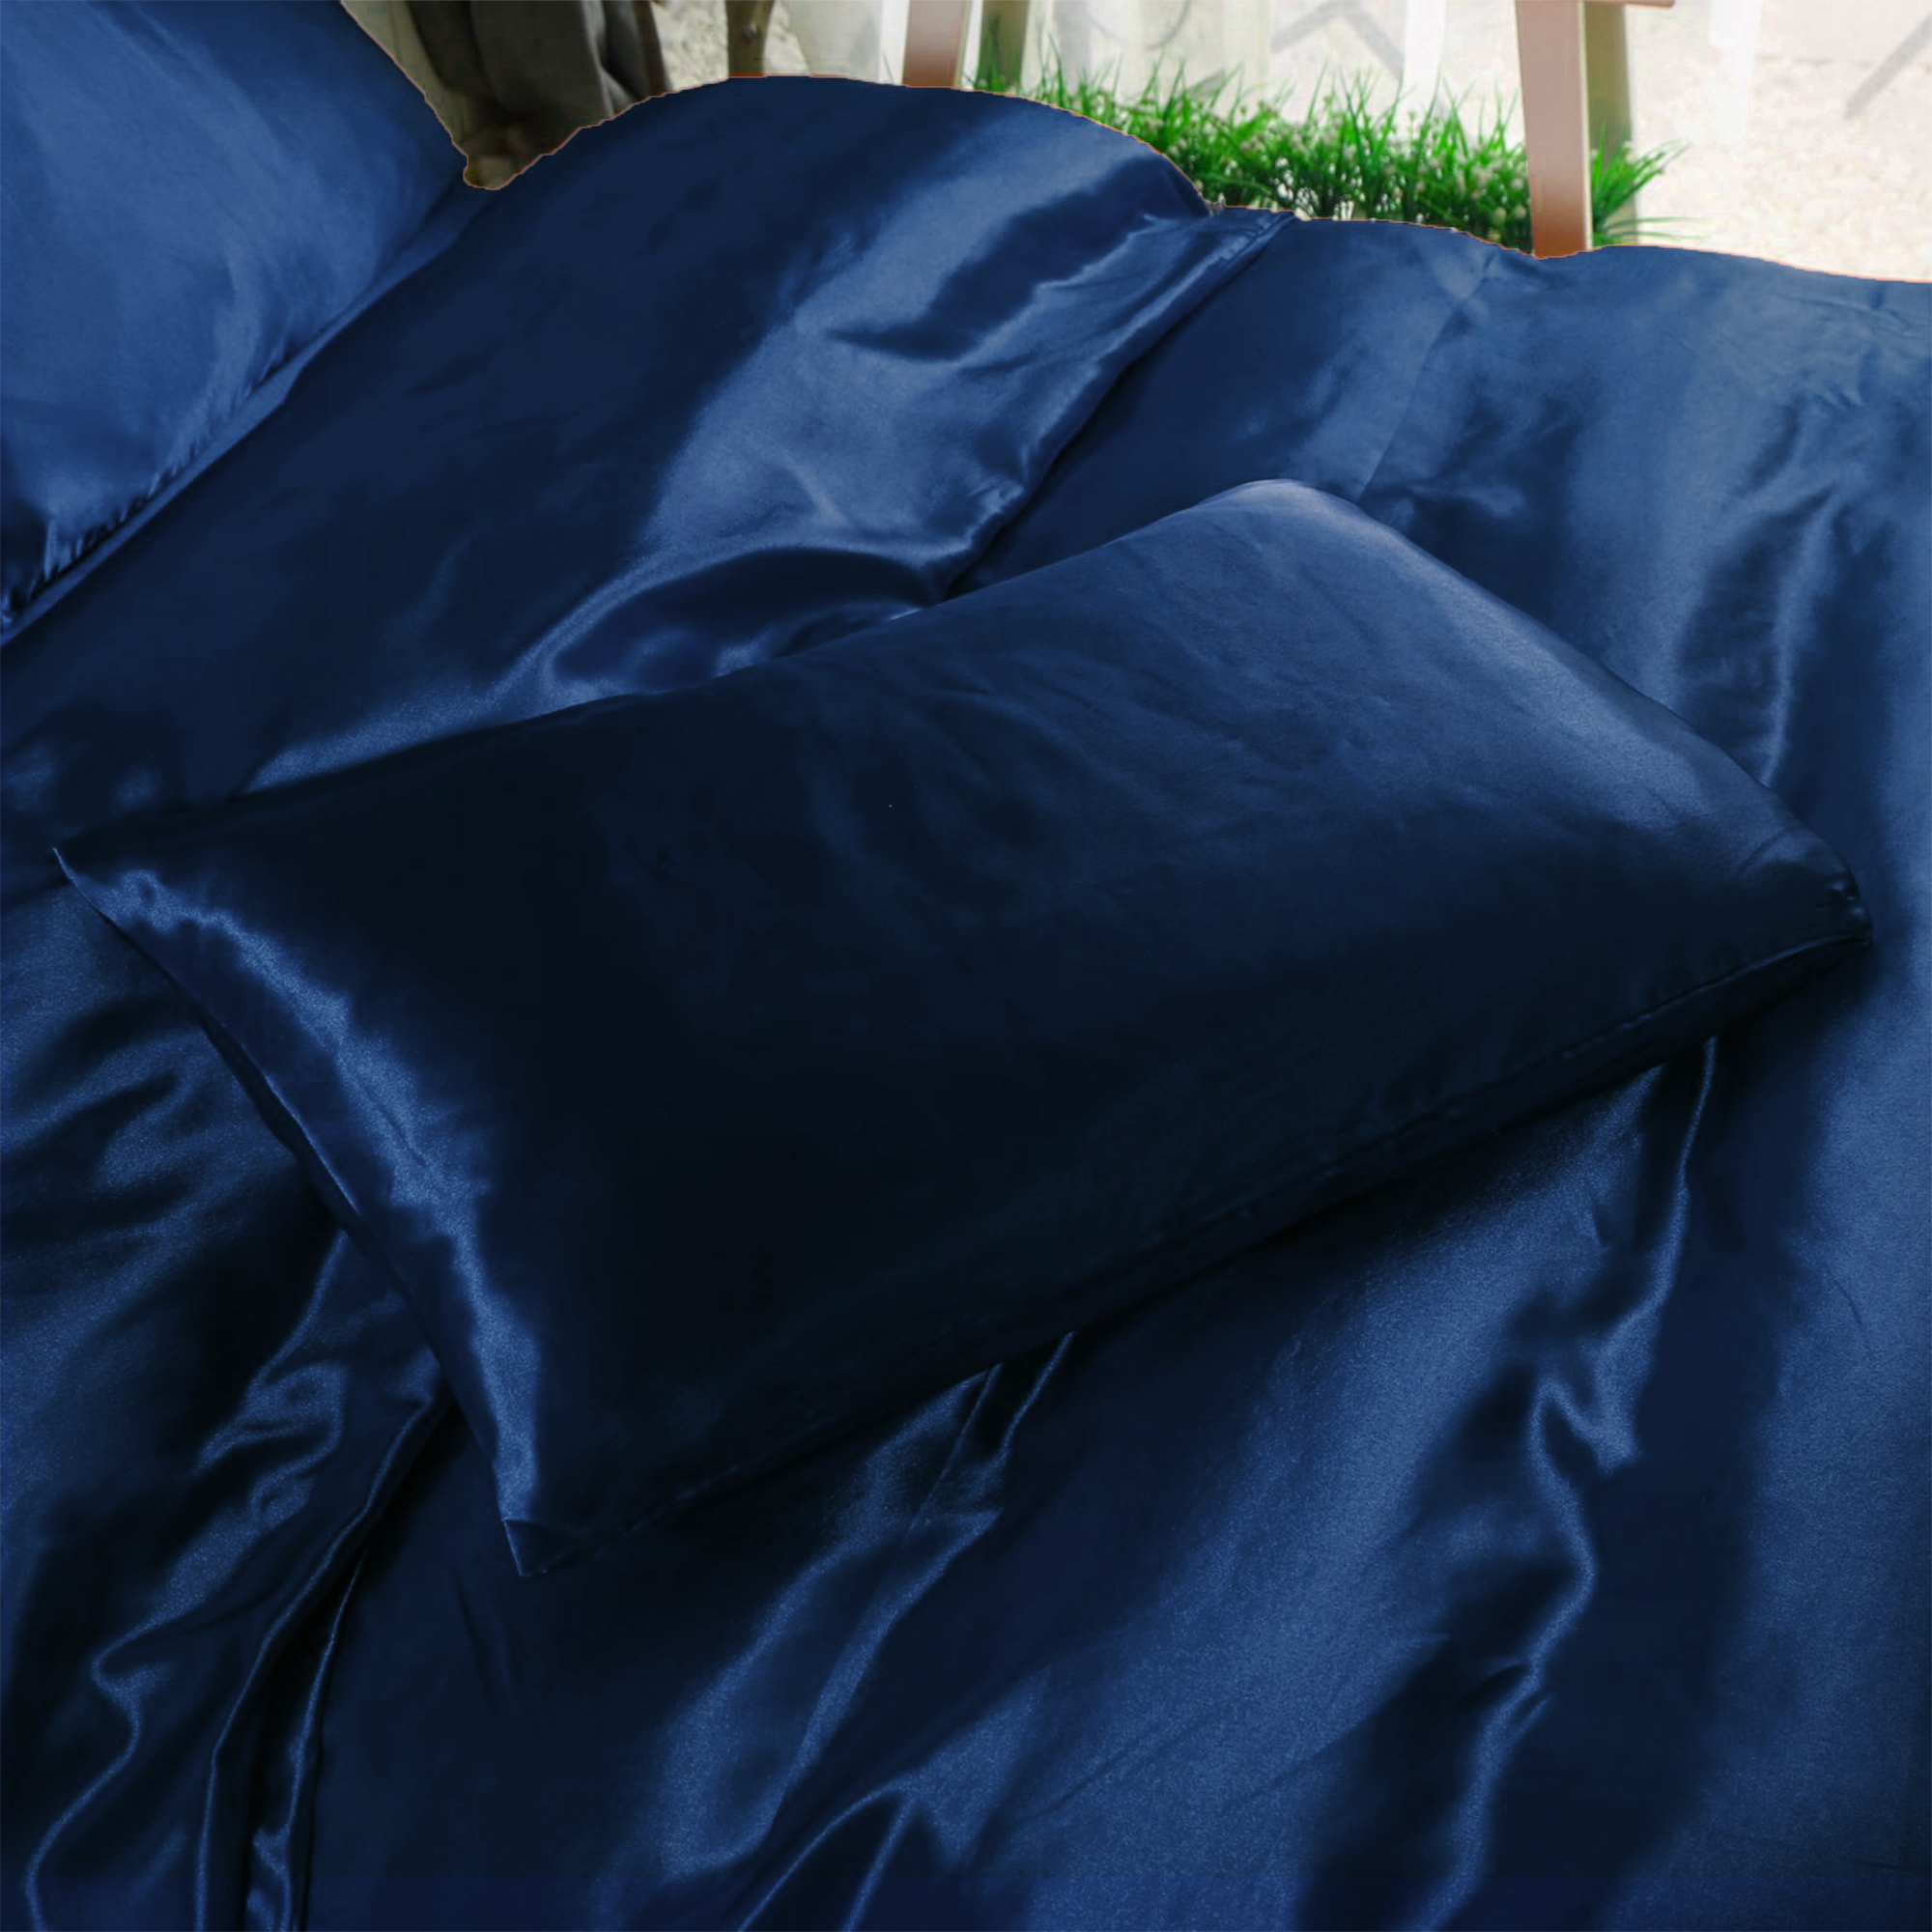 Navy Blue 6pc Satin Panel Super King Bed Duvet Quilt Cover Set